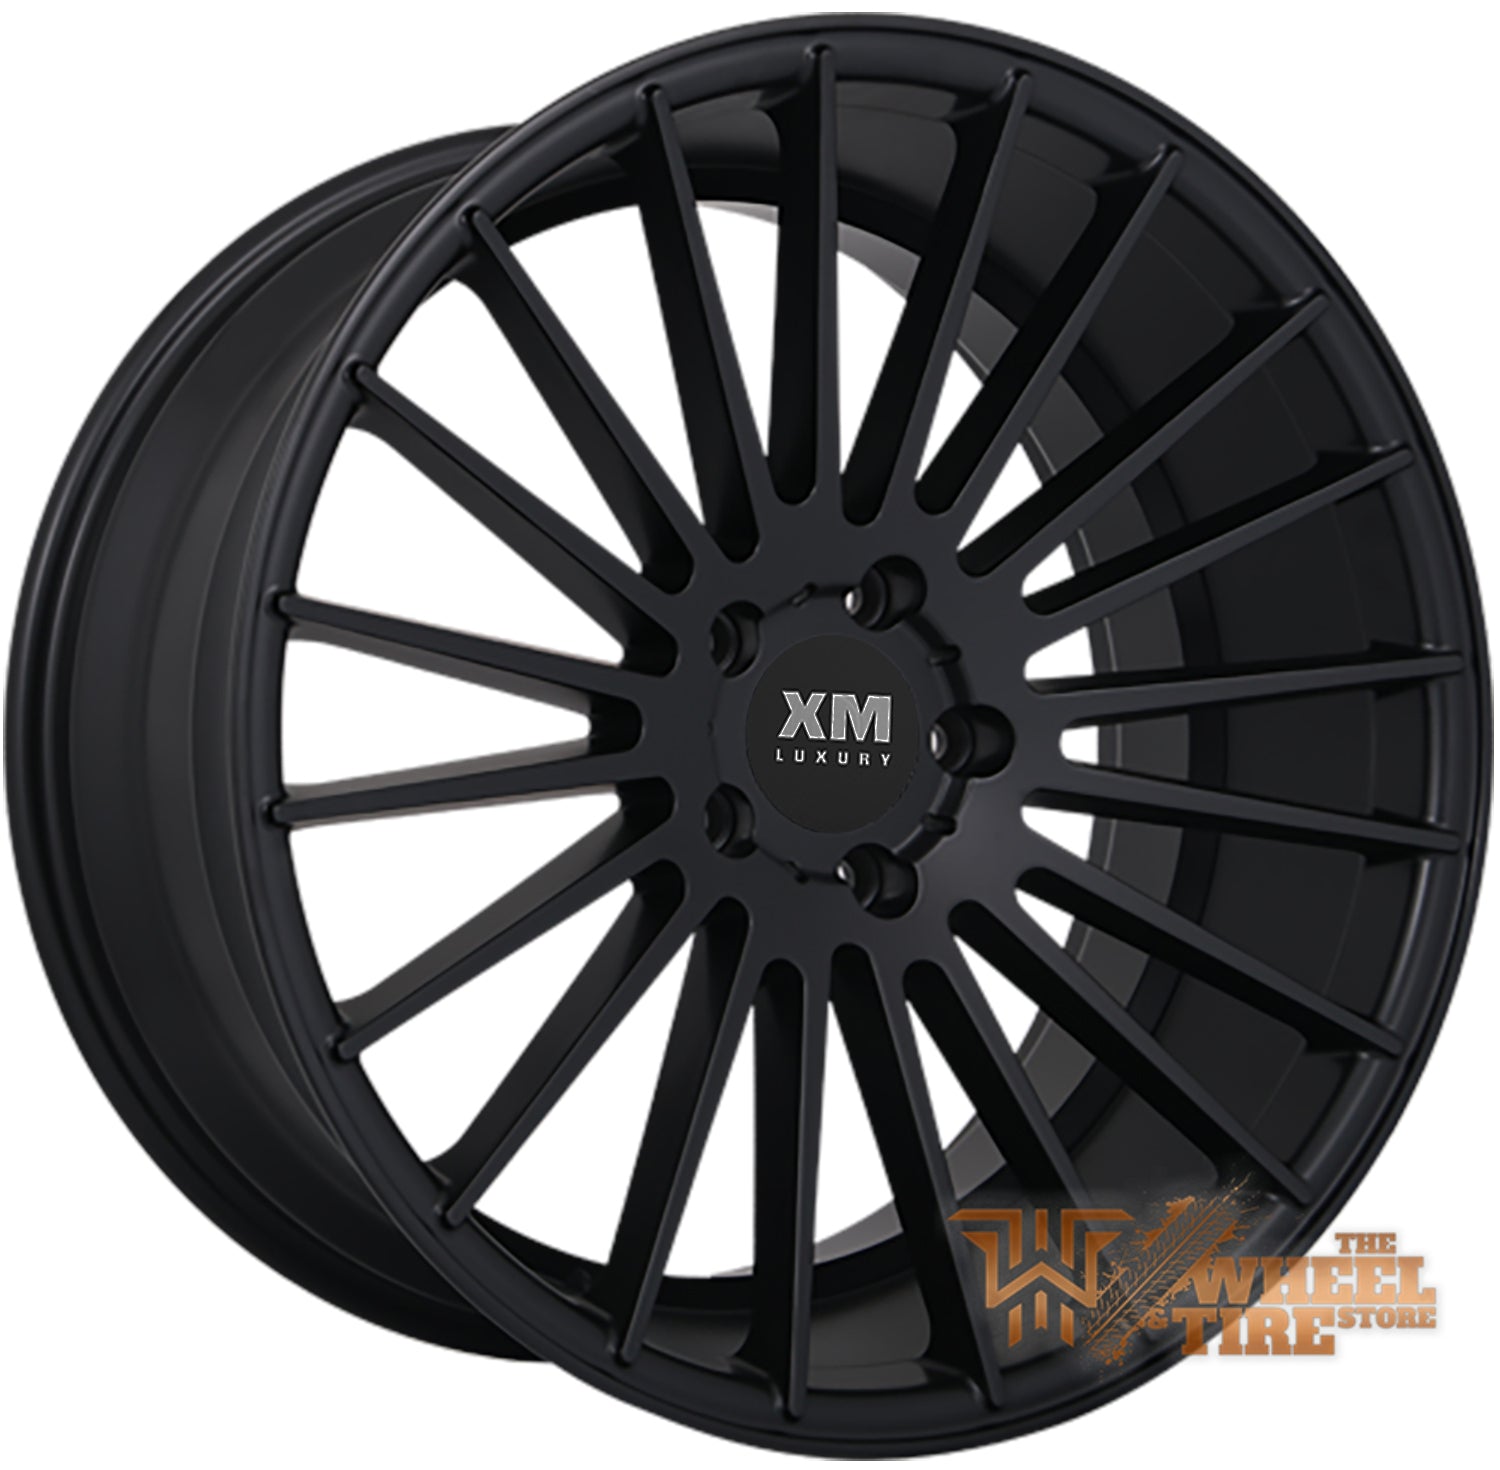 XM LUXURY XM-201 Wheel in Satin Black (Set of 4)